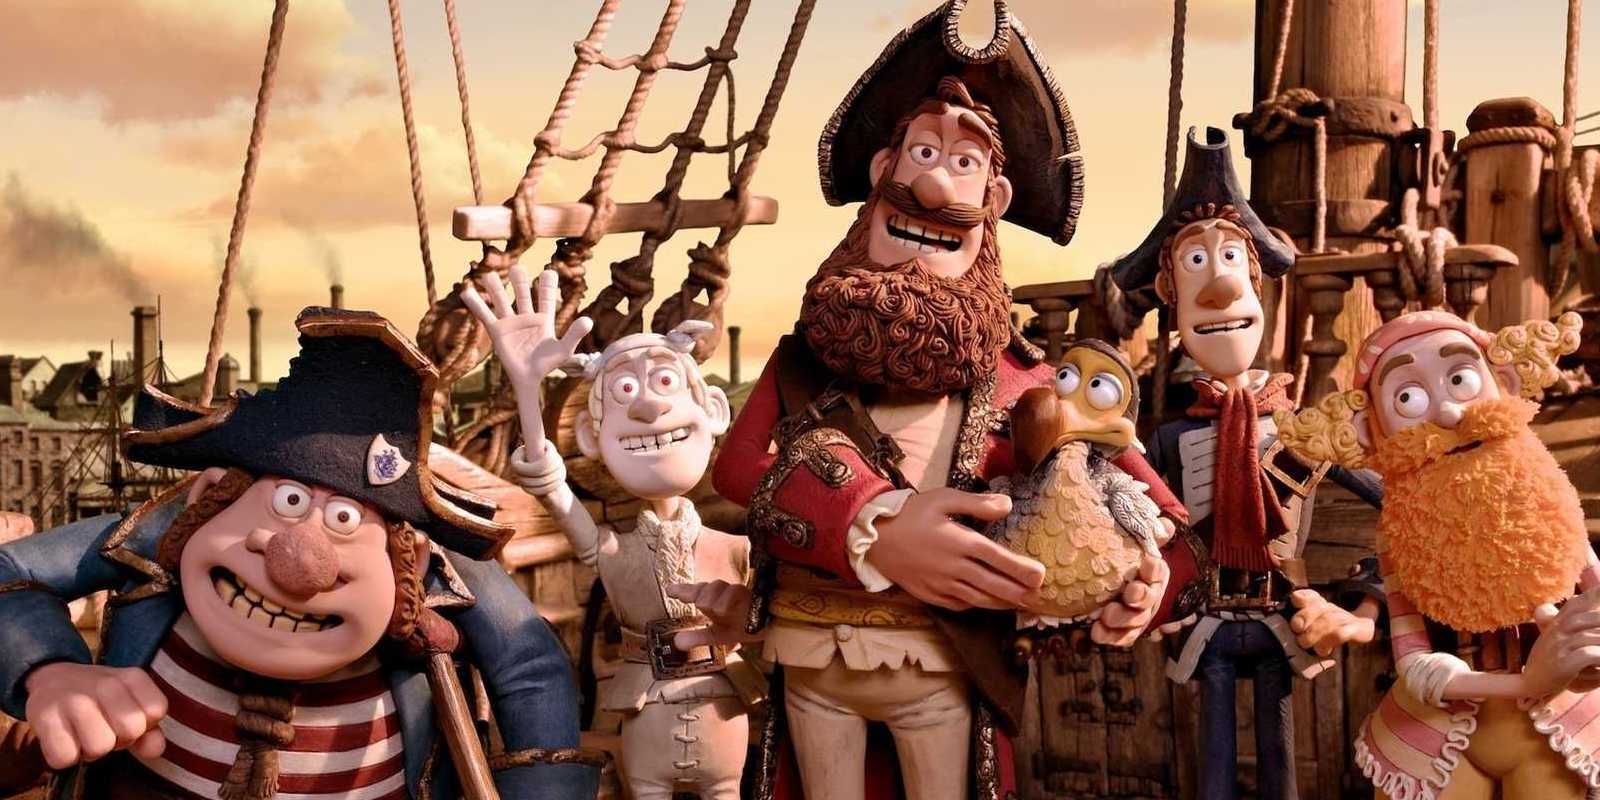 The crew in Pirates.